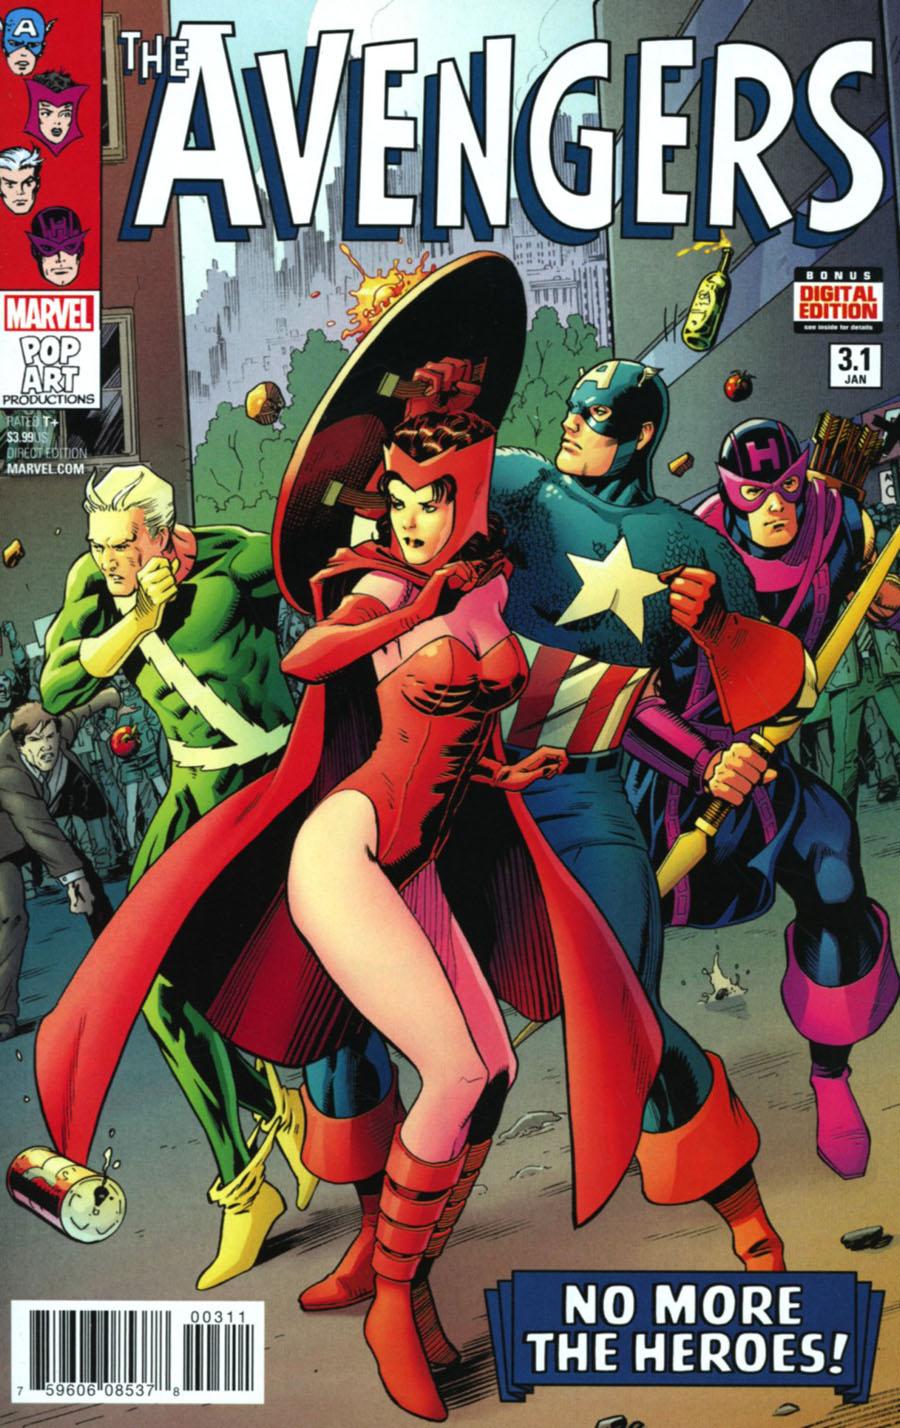 The Avengers Vol. 6 #3.1